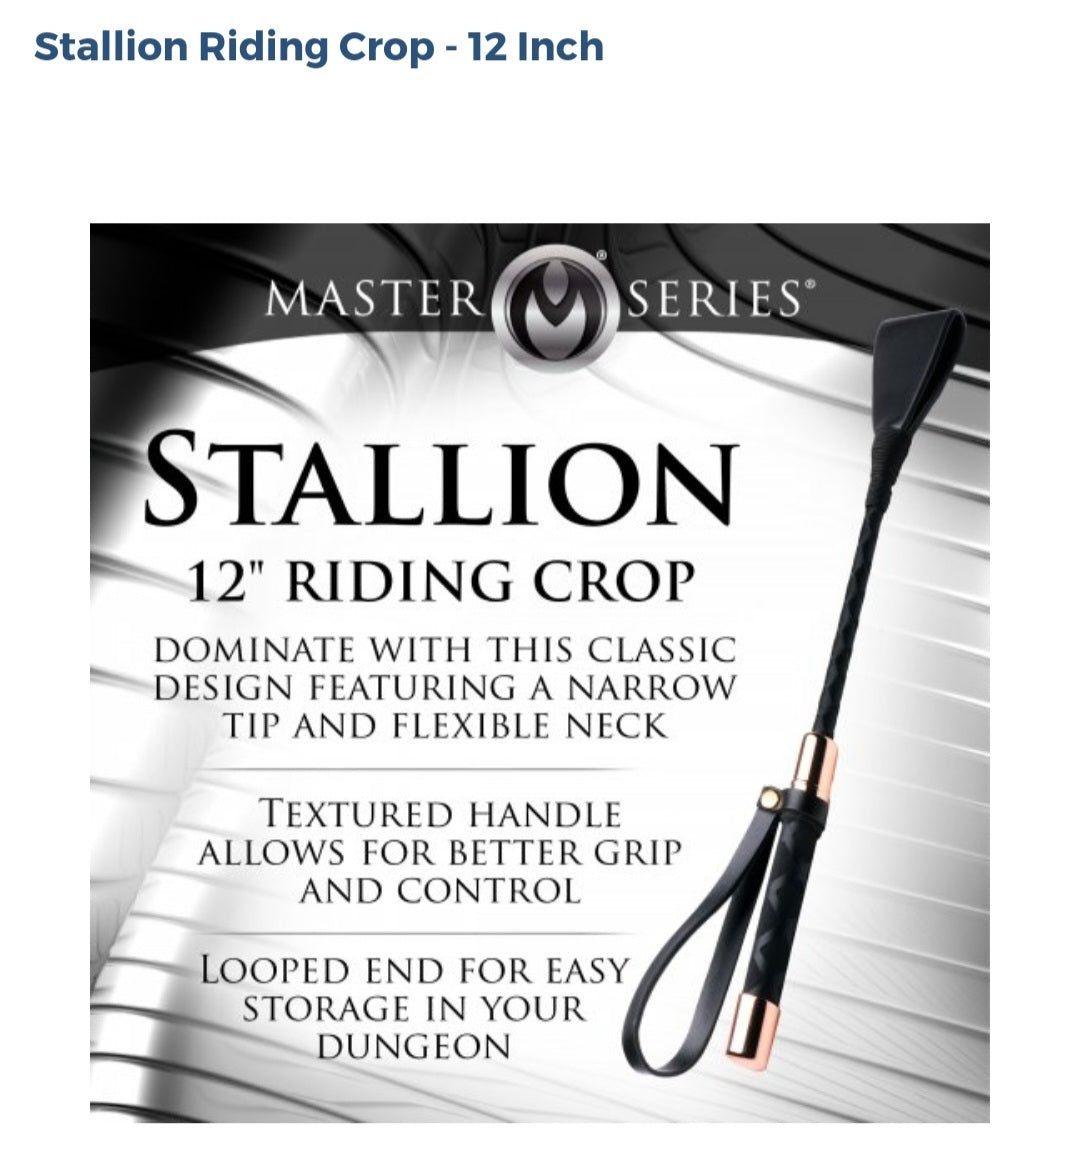 Master Series Stallion 12" Riding Crop